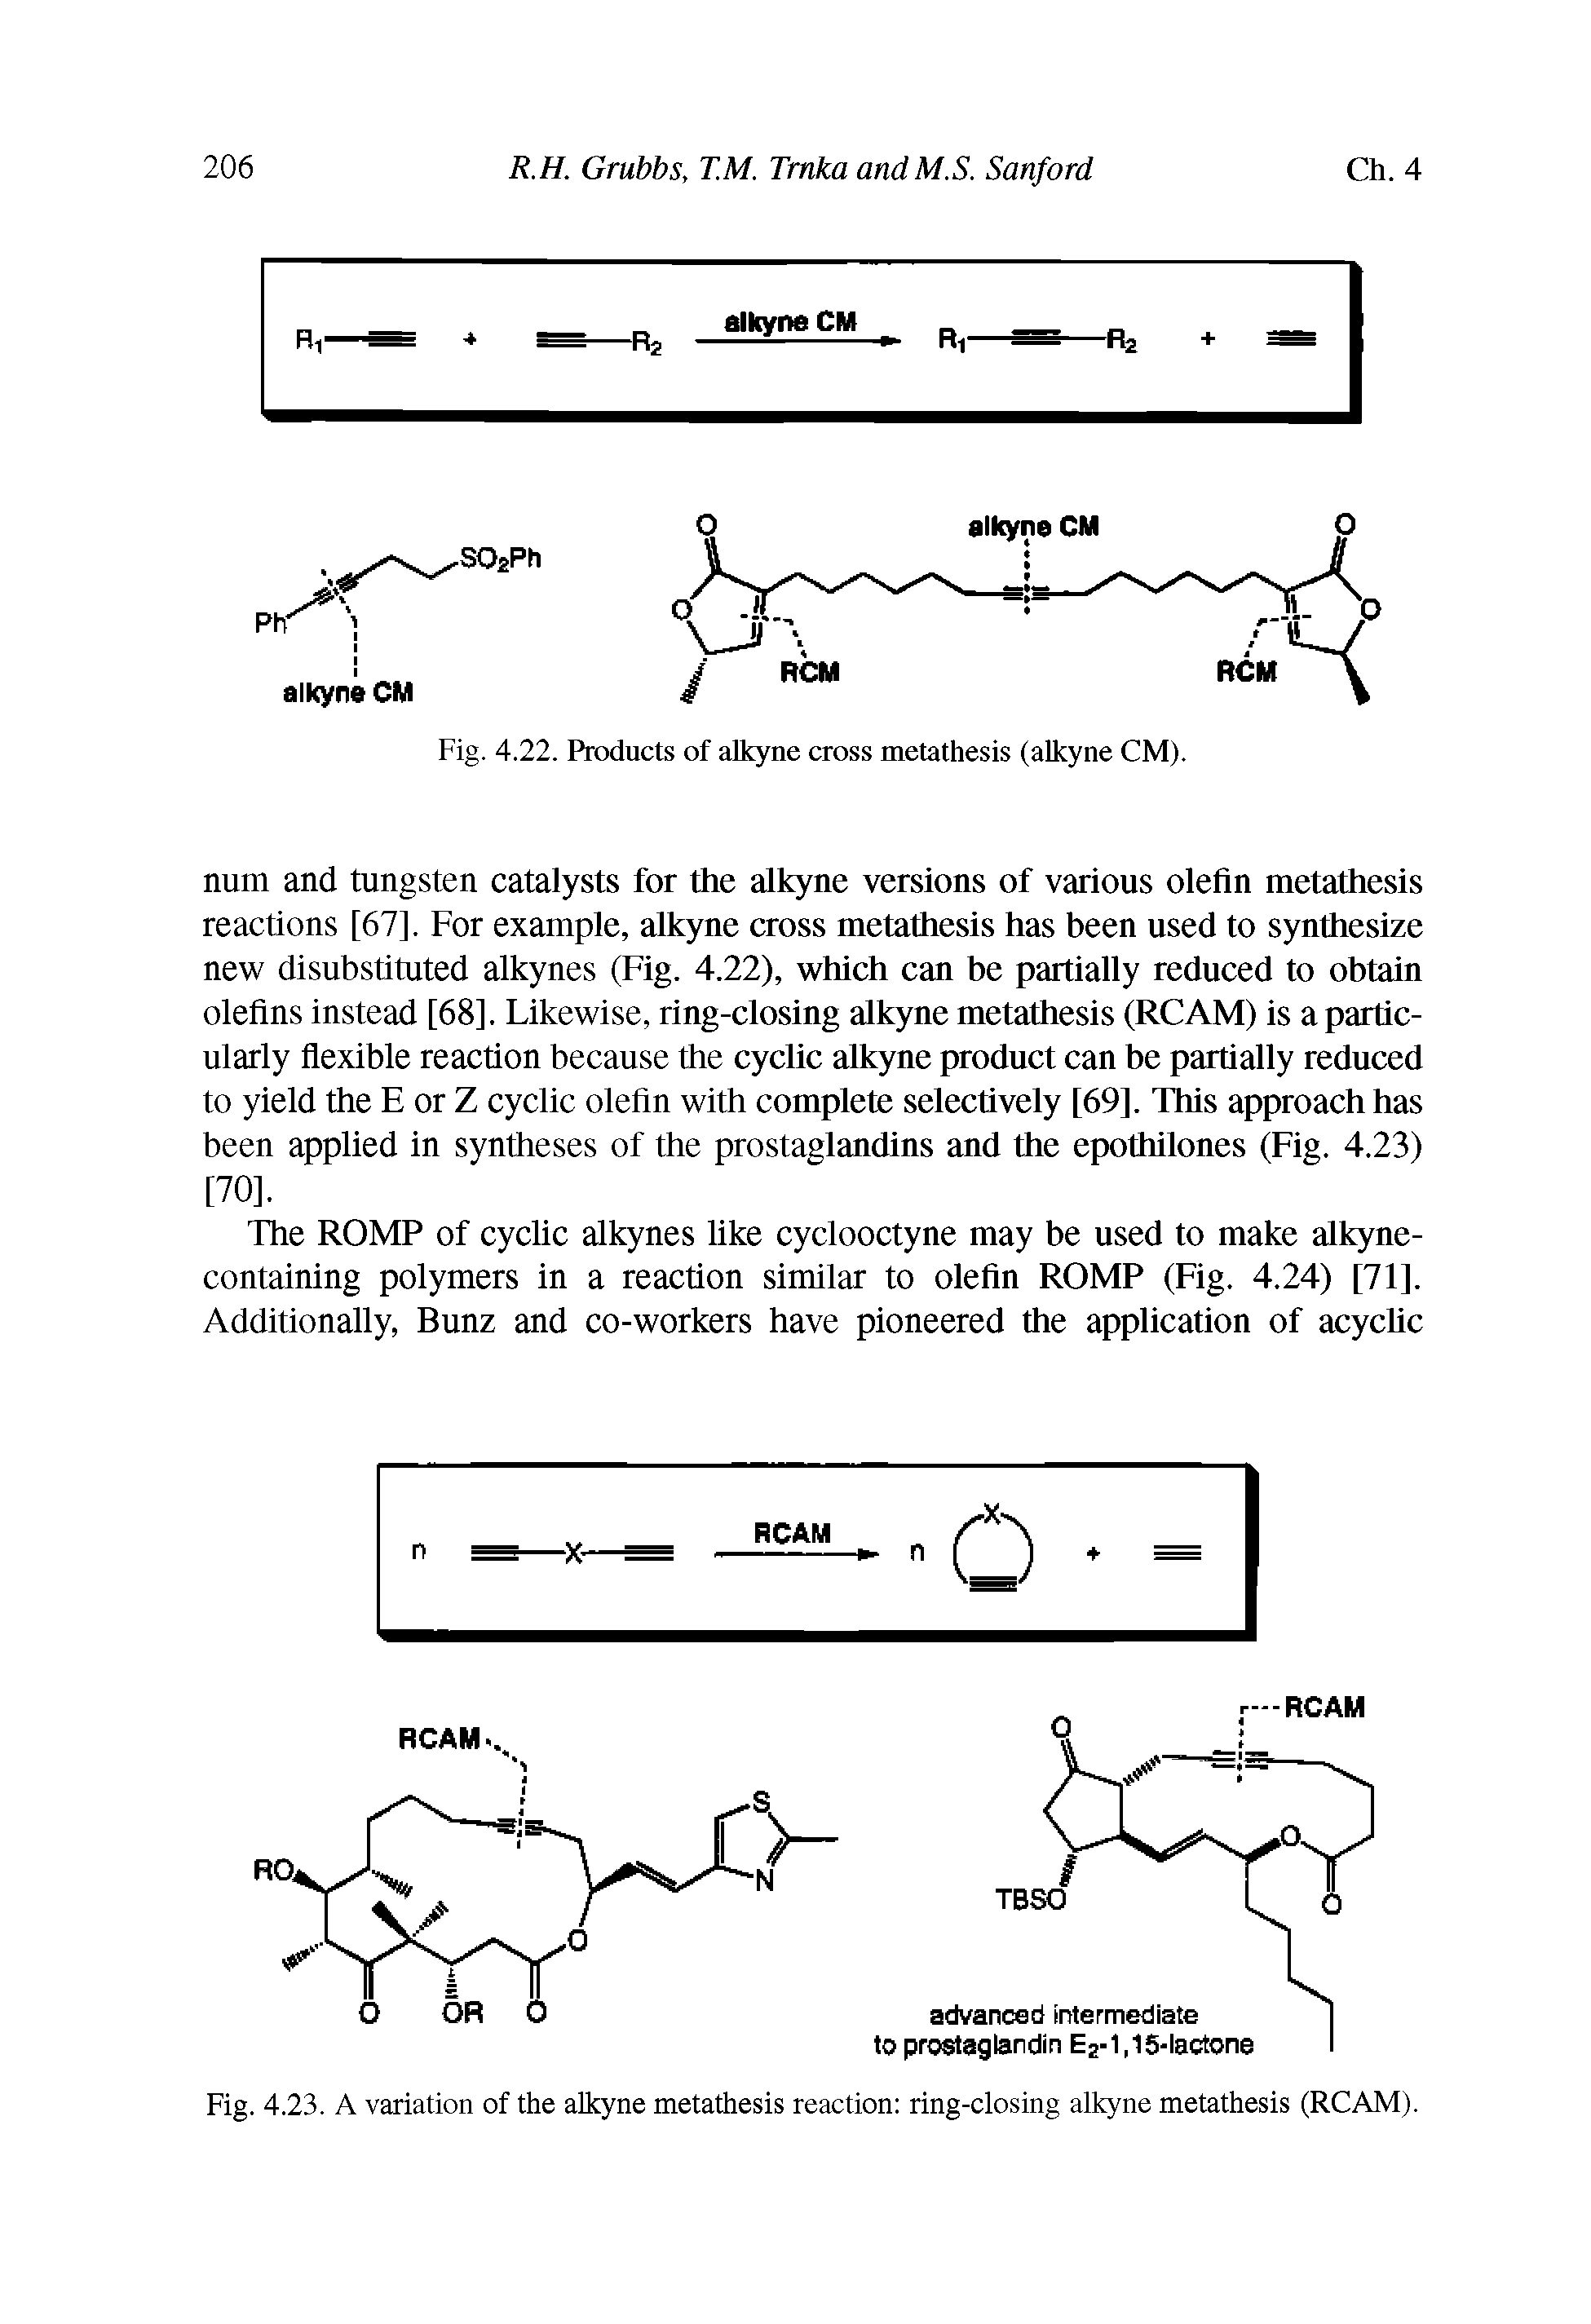 Fig. 4.23. A variation of the alkyne metathesis reaction ring-closing alkyne metathesis (RCAM).